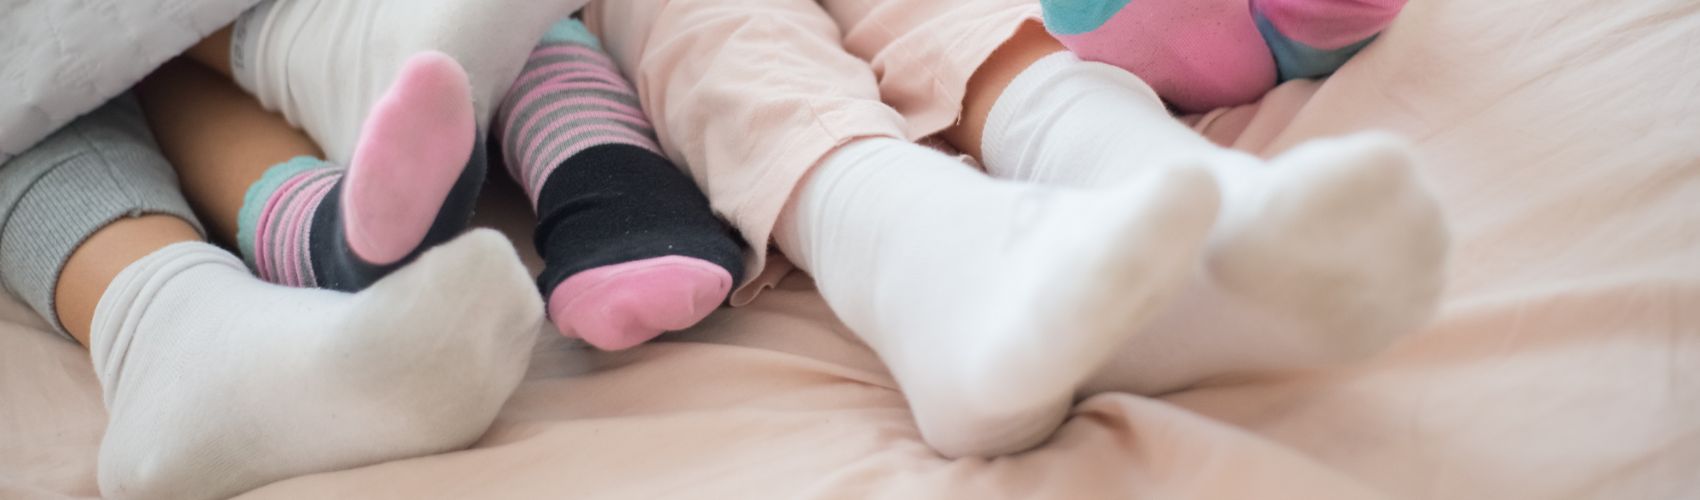 People wearing socks in bed